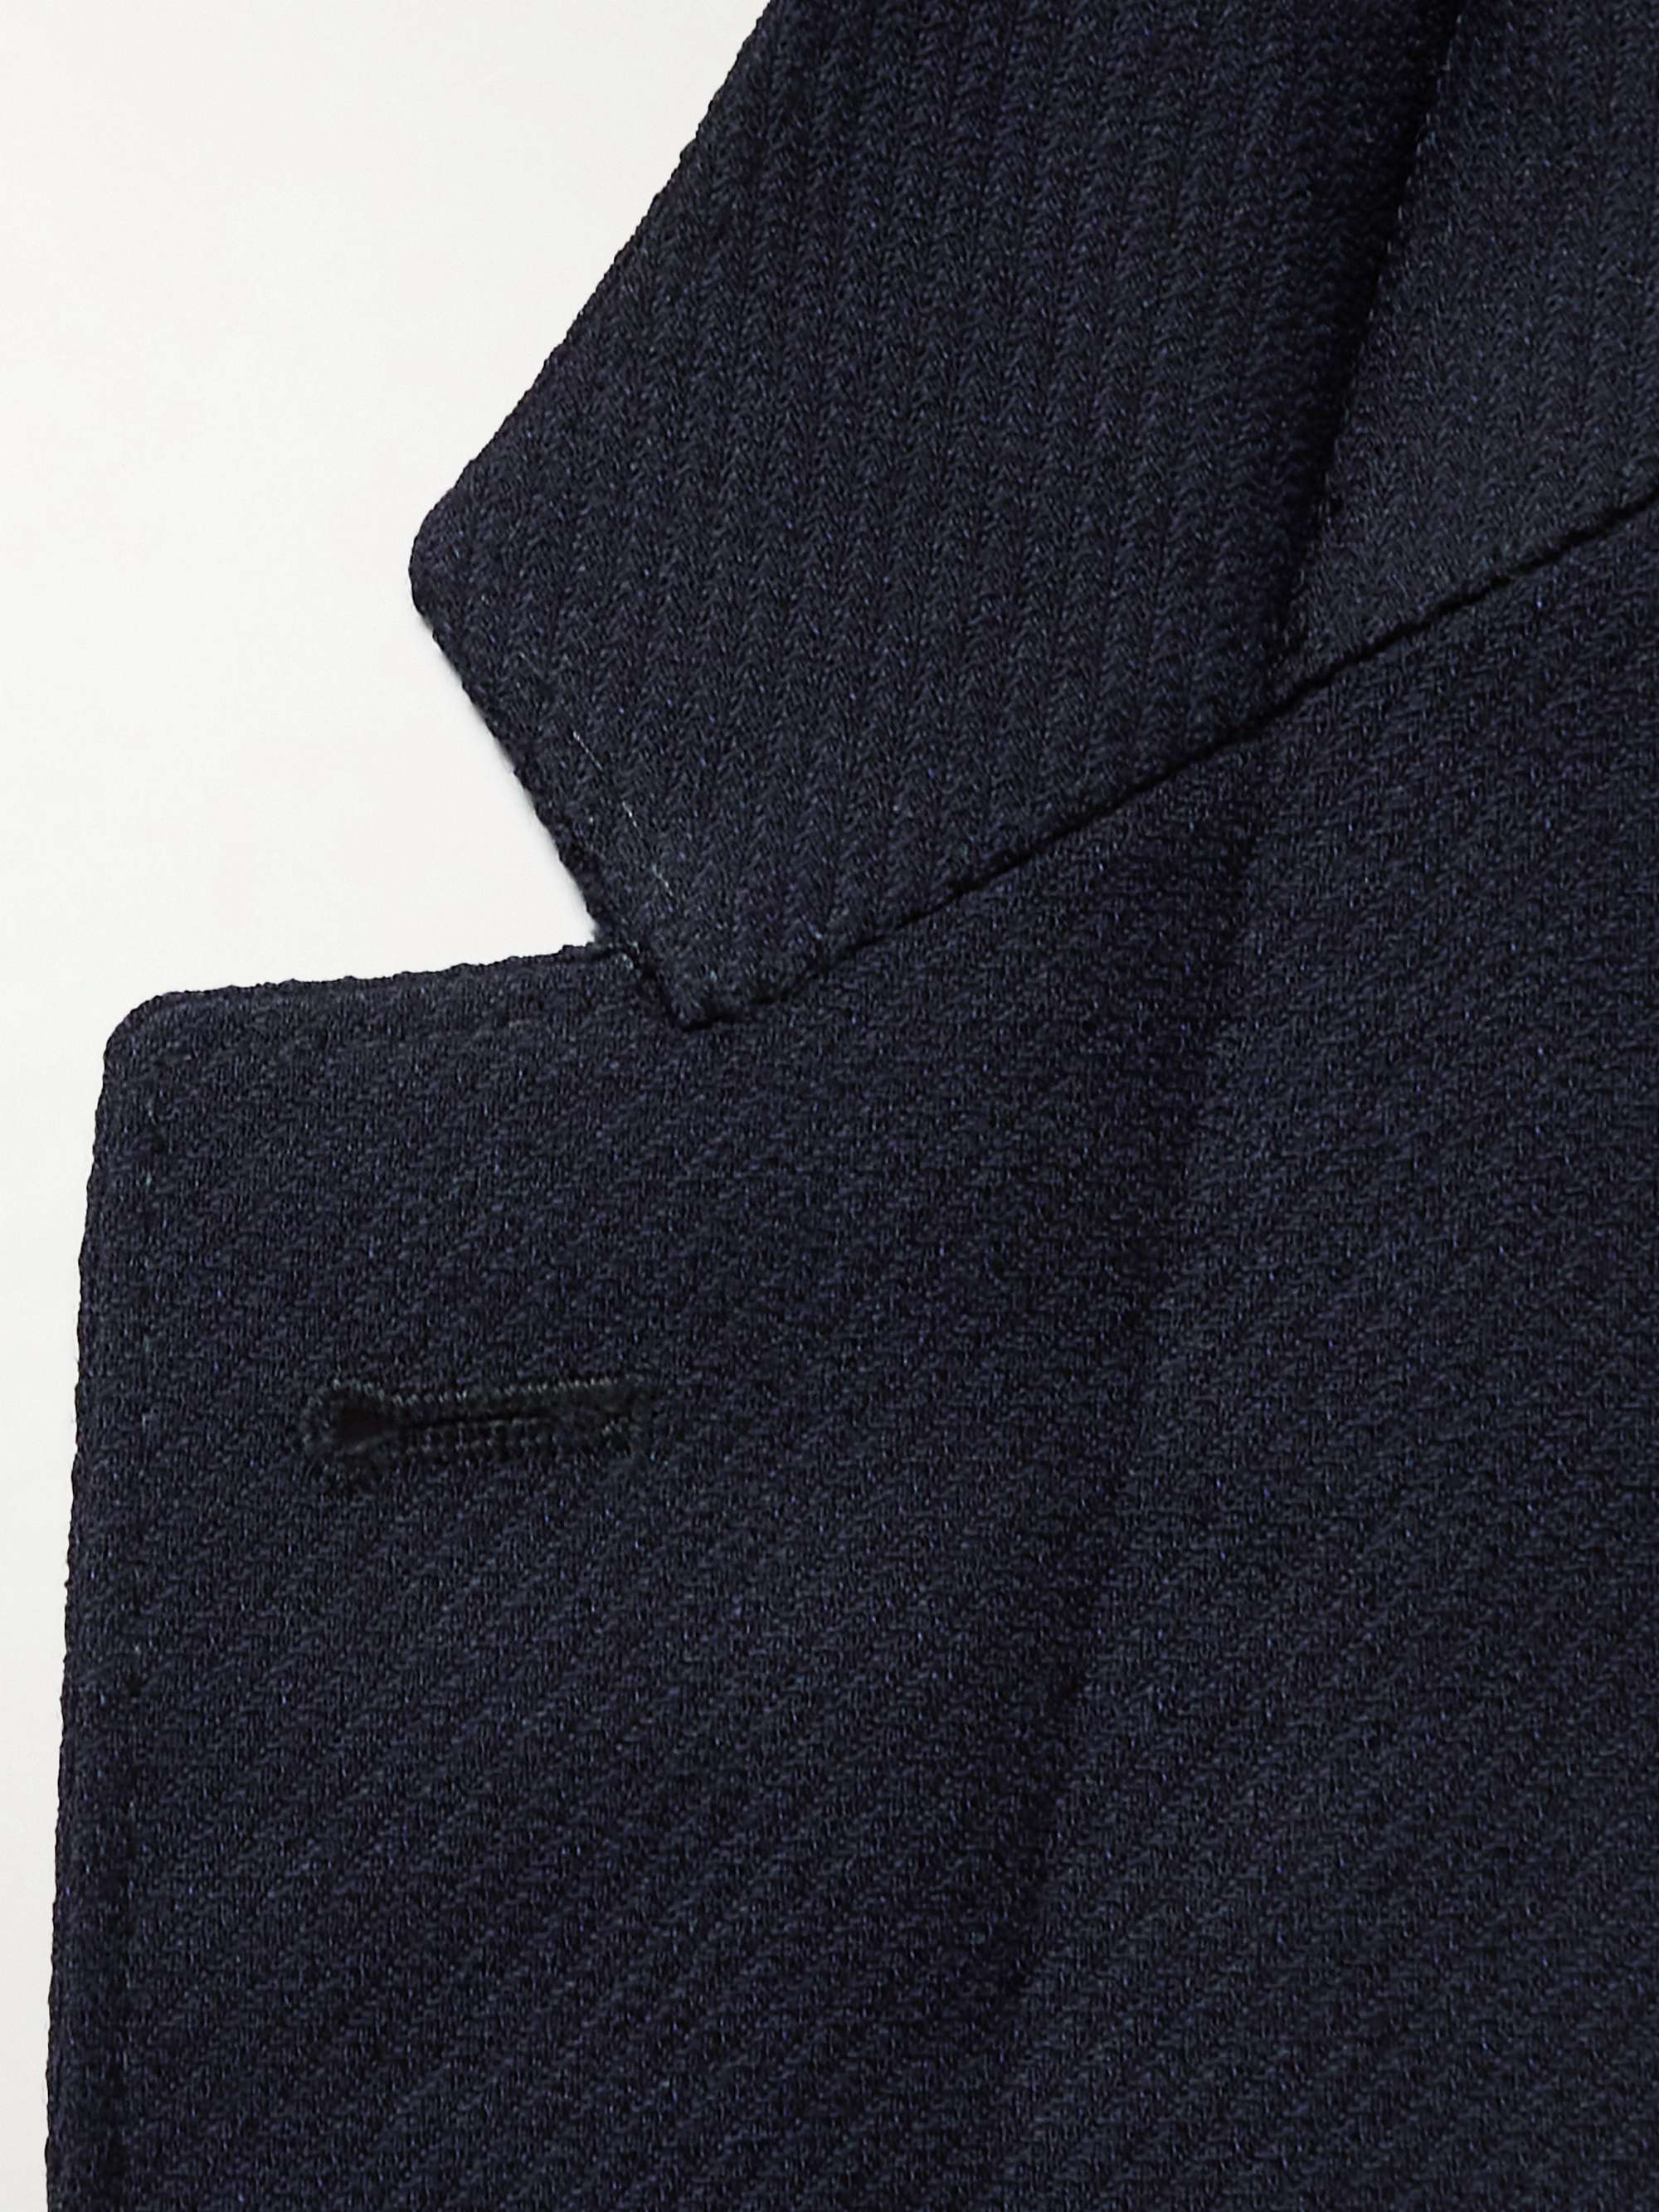 CANALI Slim-Fit Wool-Twill Suit Jacket